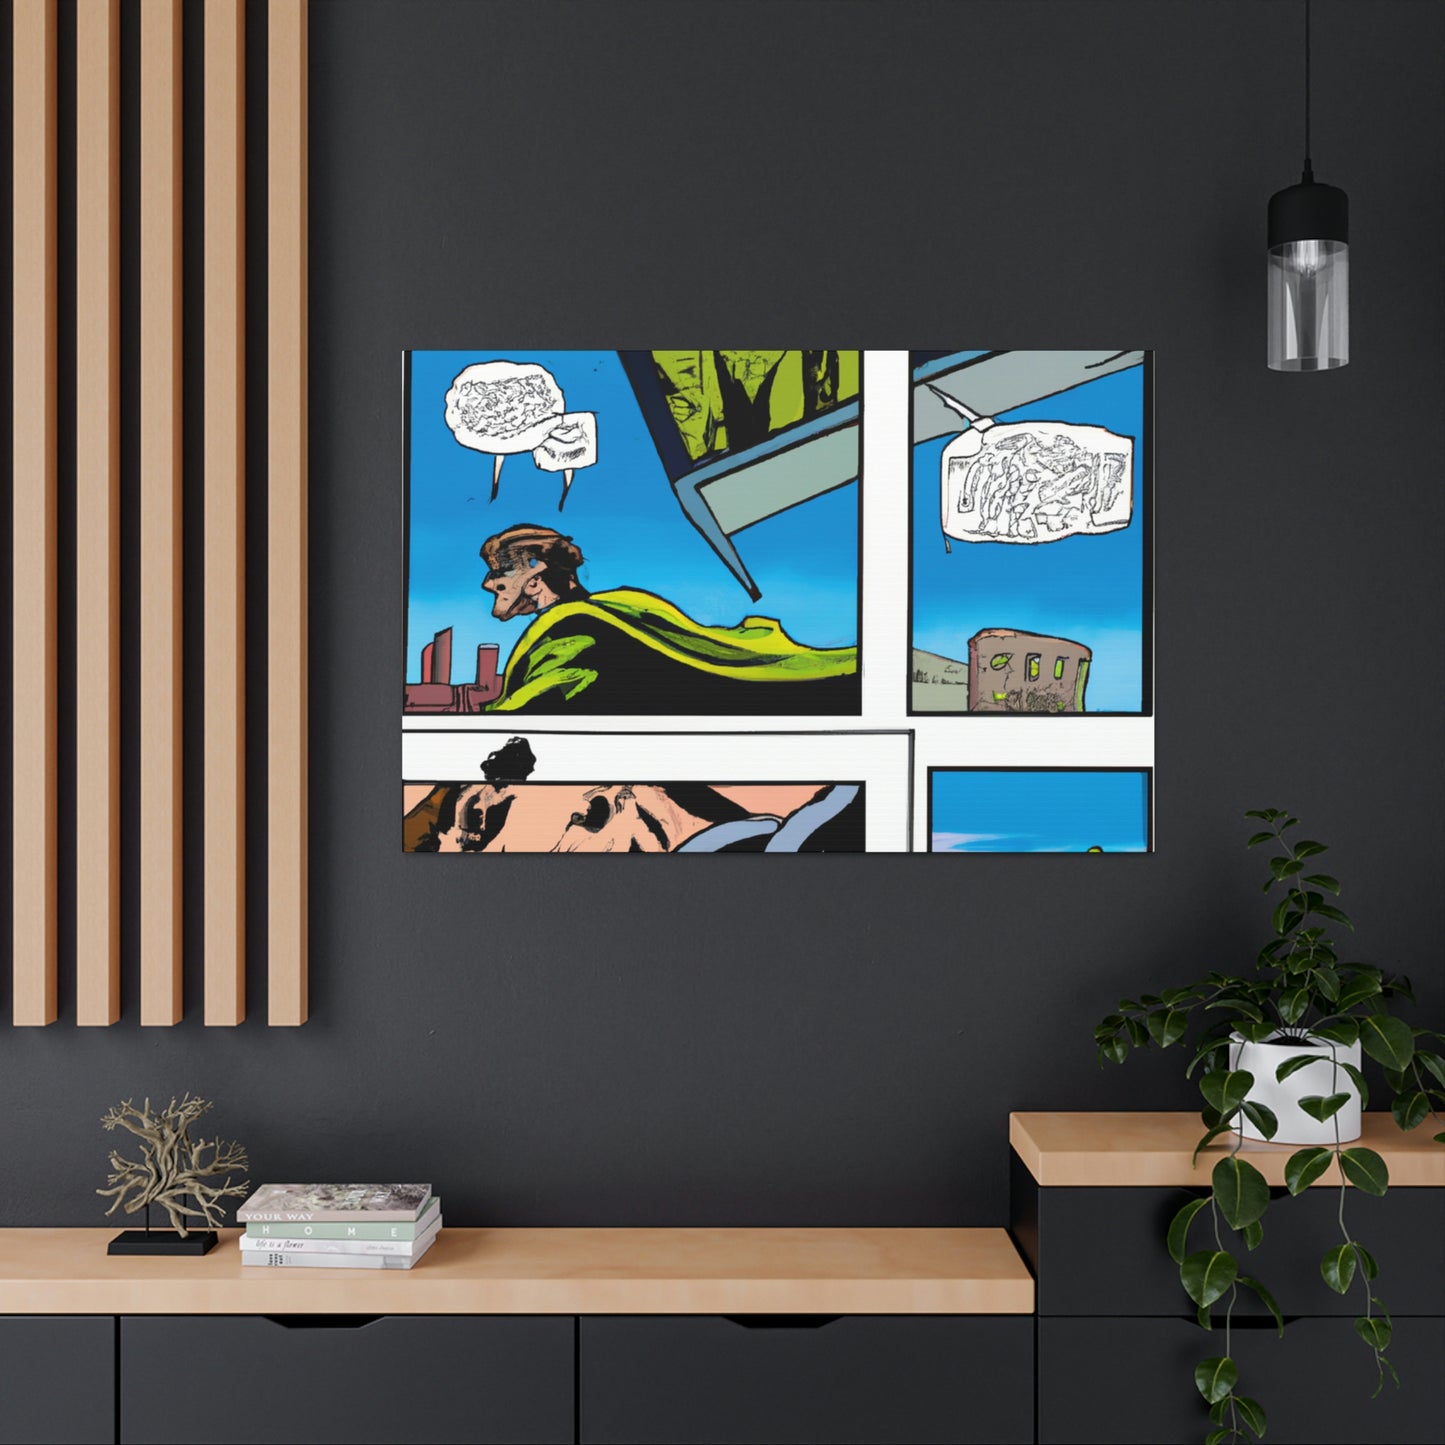 Captain Comet. - Comics Collector Canvas Wall Art For Bedroom Office Living Room